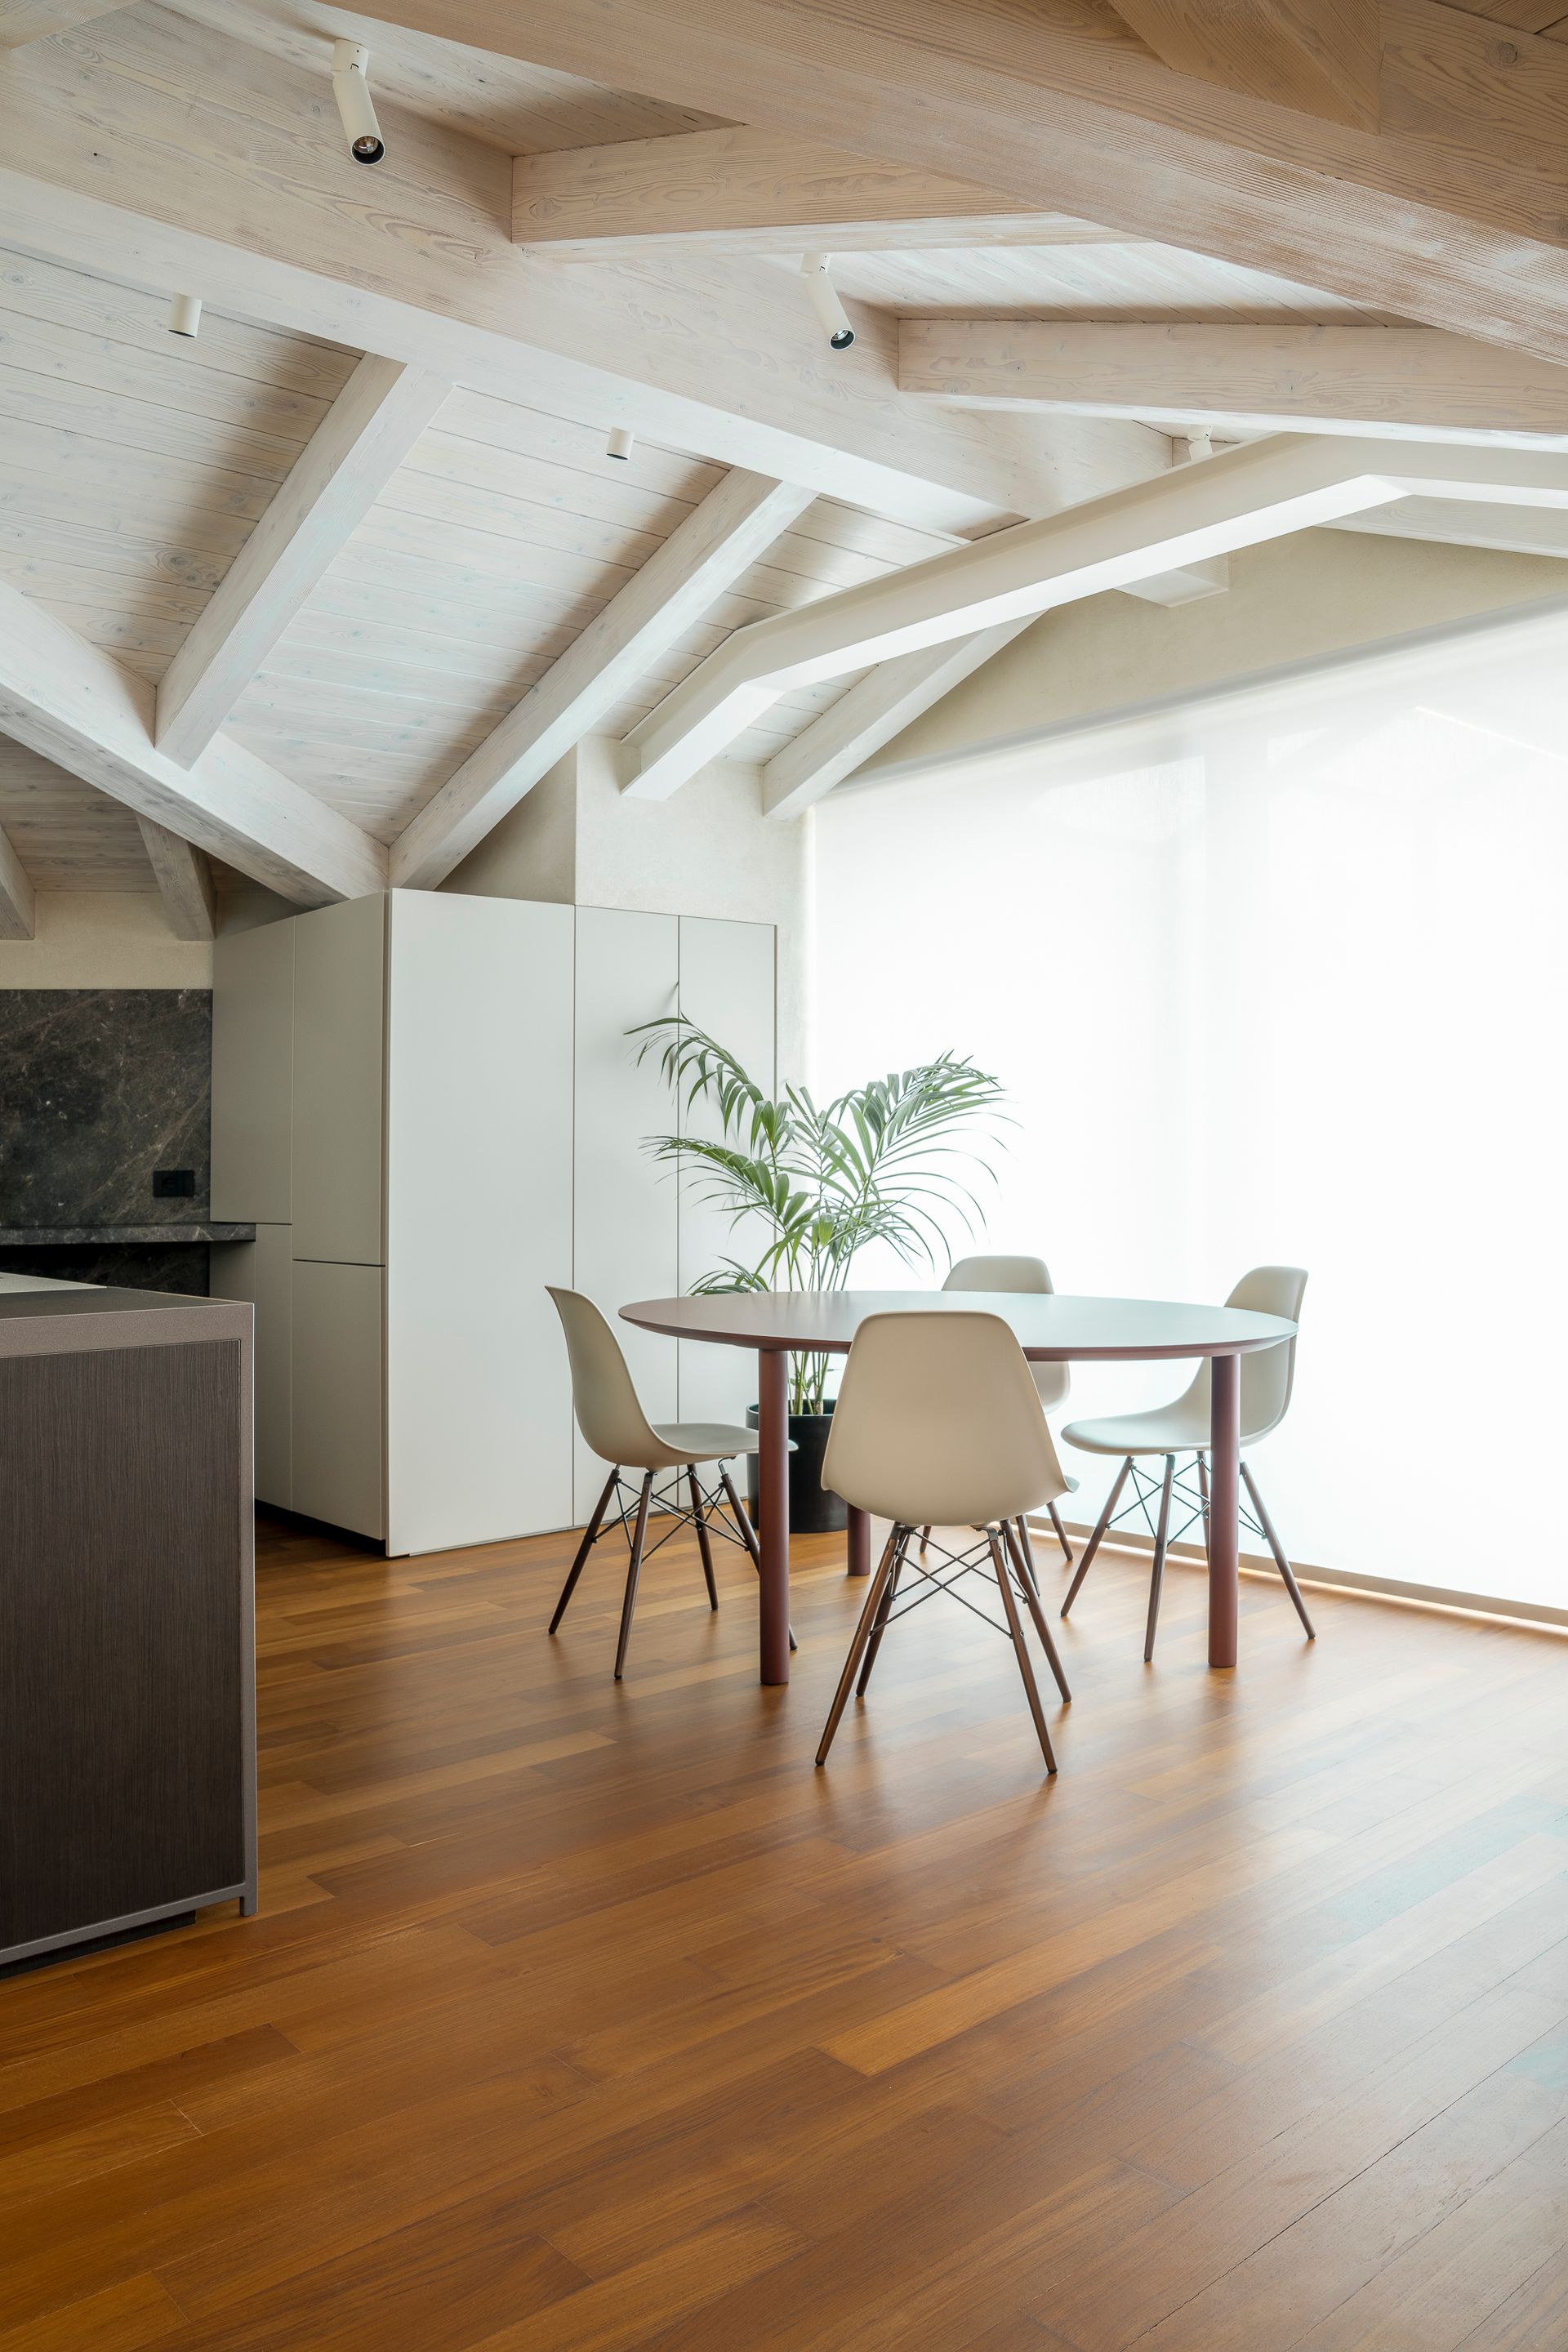 Interior design project, attic renovation with terrace with a view Bergamo, Milan, Lake Como, London, New York, Paris, Gstaad. Officina Magisafi architecture design - table